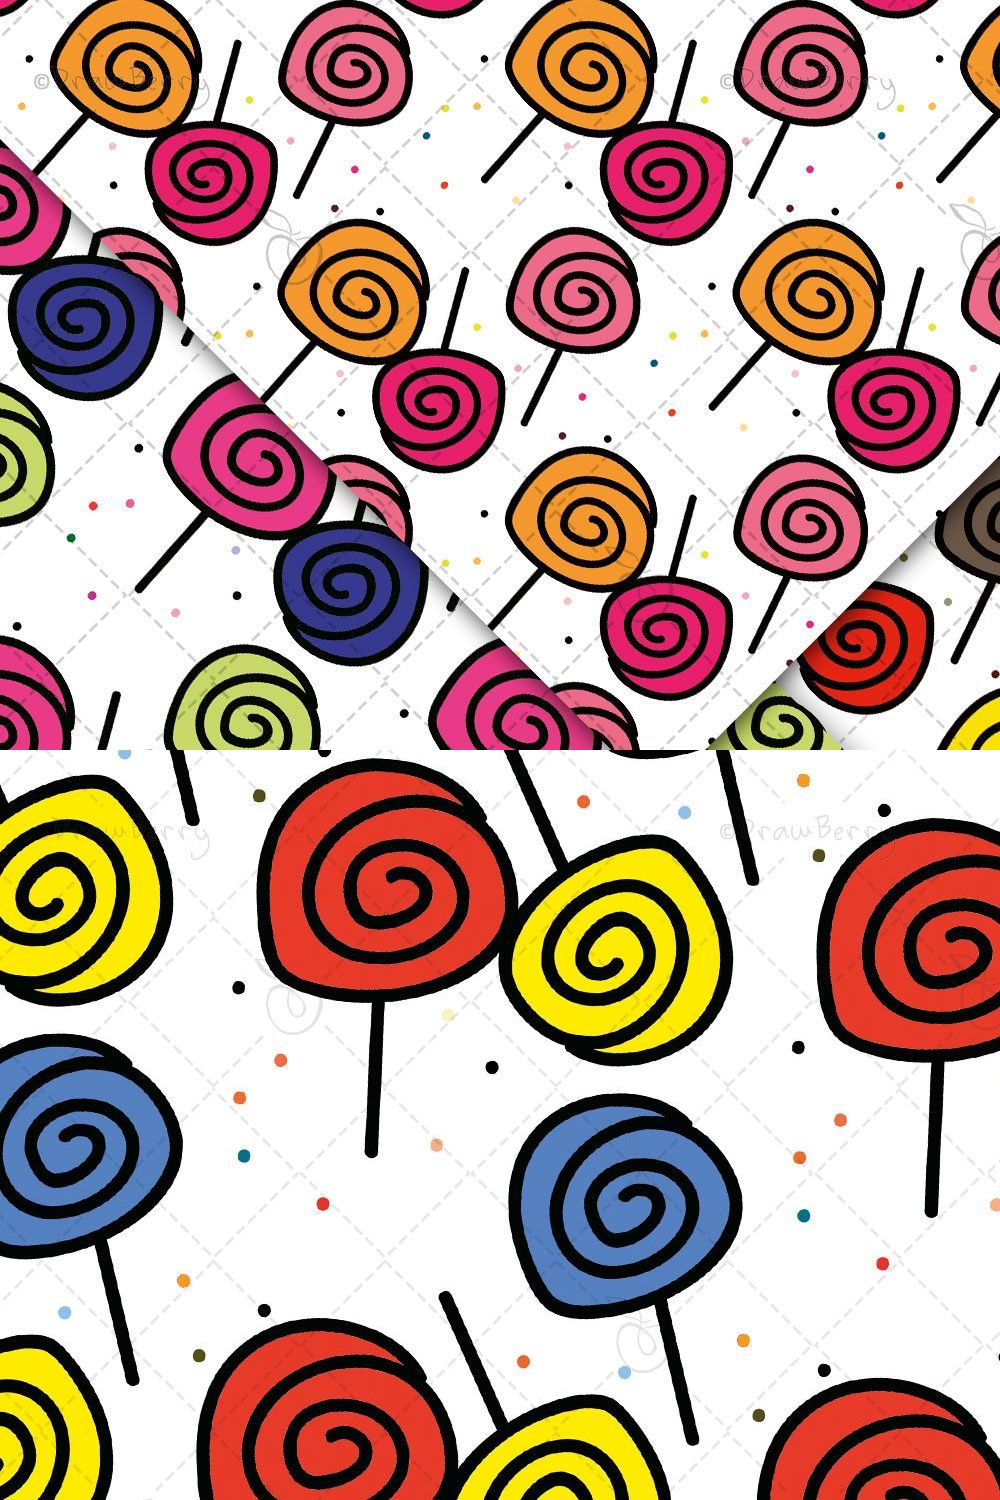 Cute Lollipop Candy Patterns DP092 pinterest preview image.